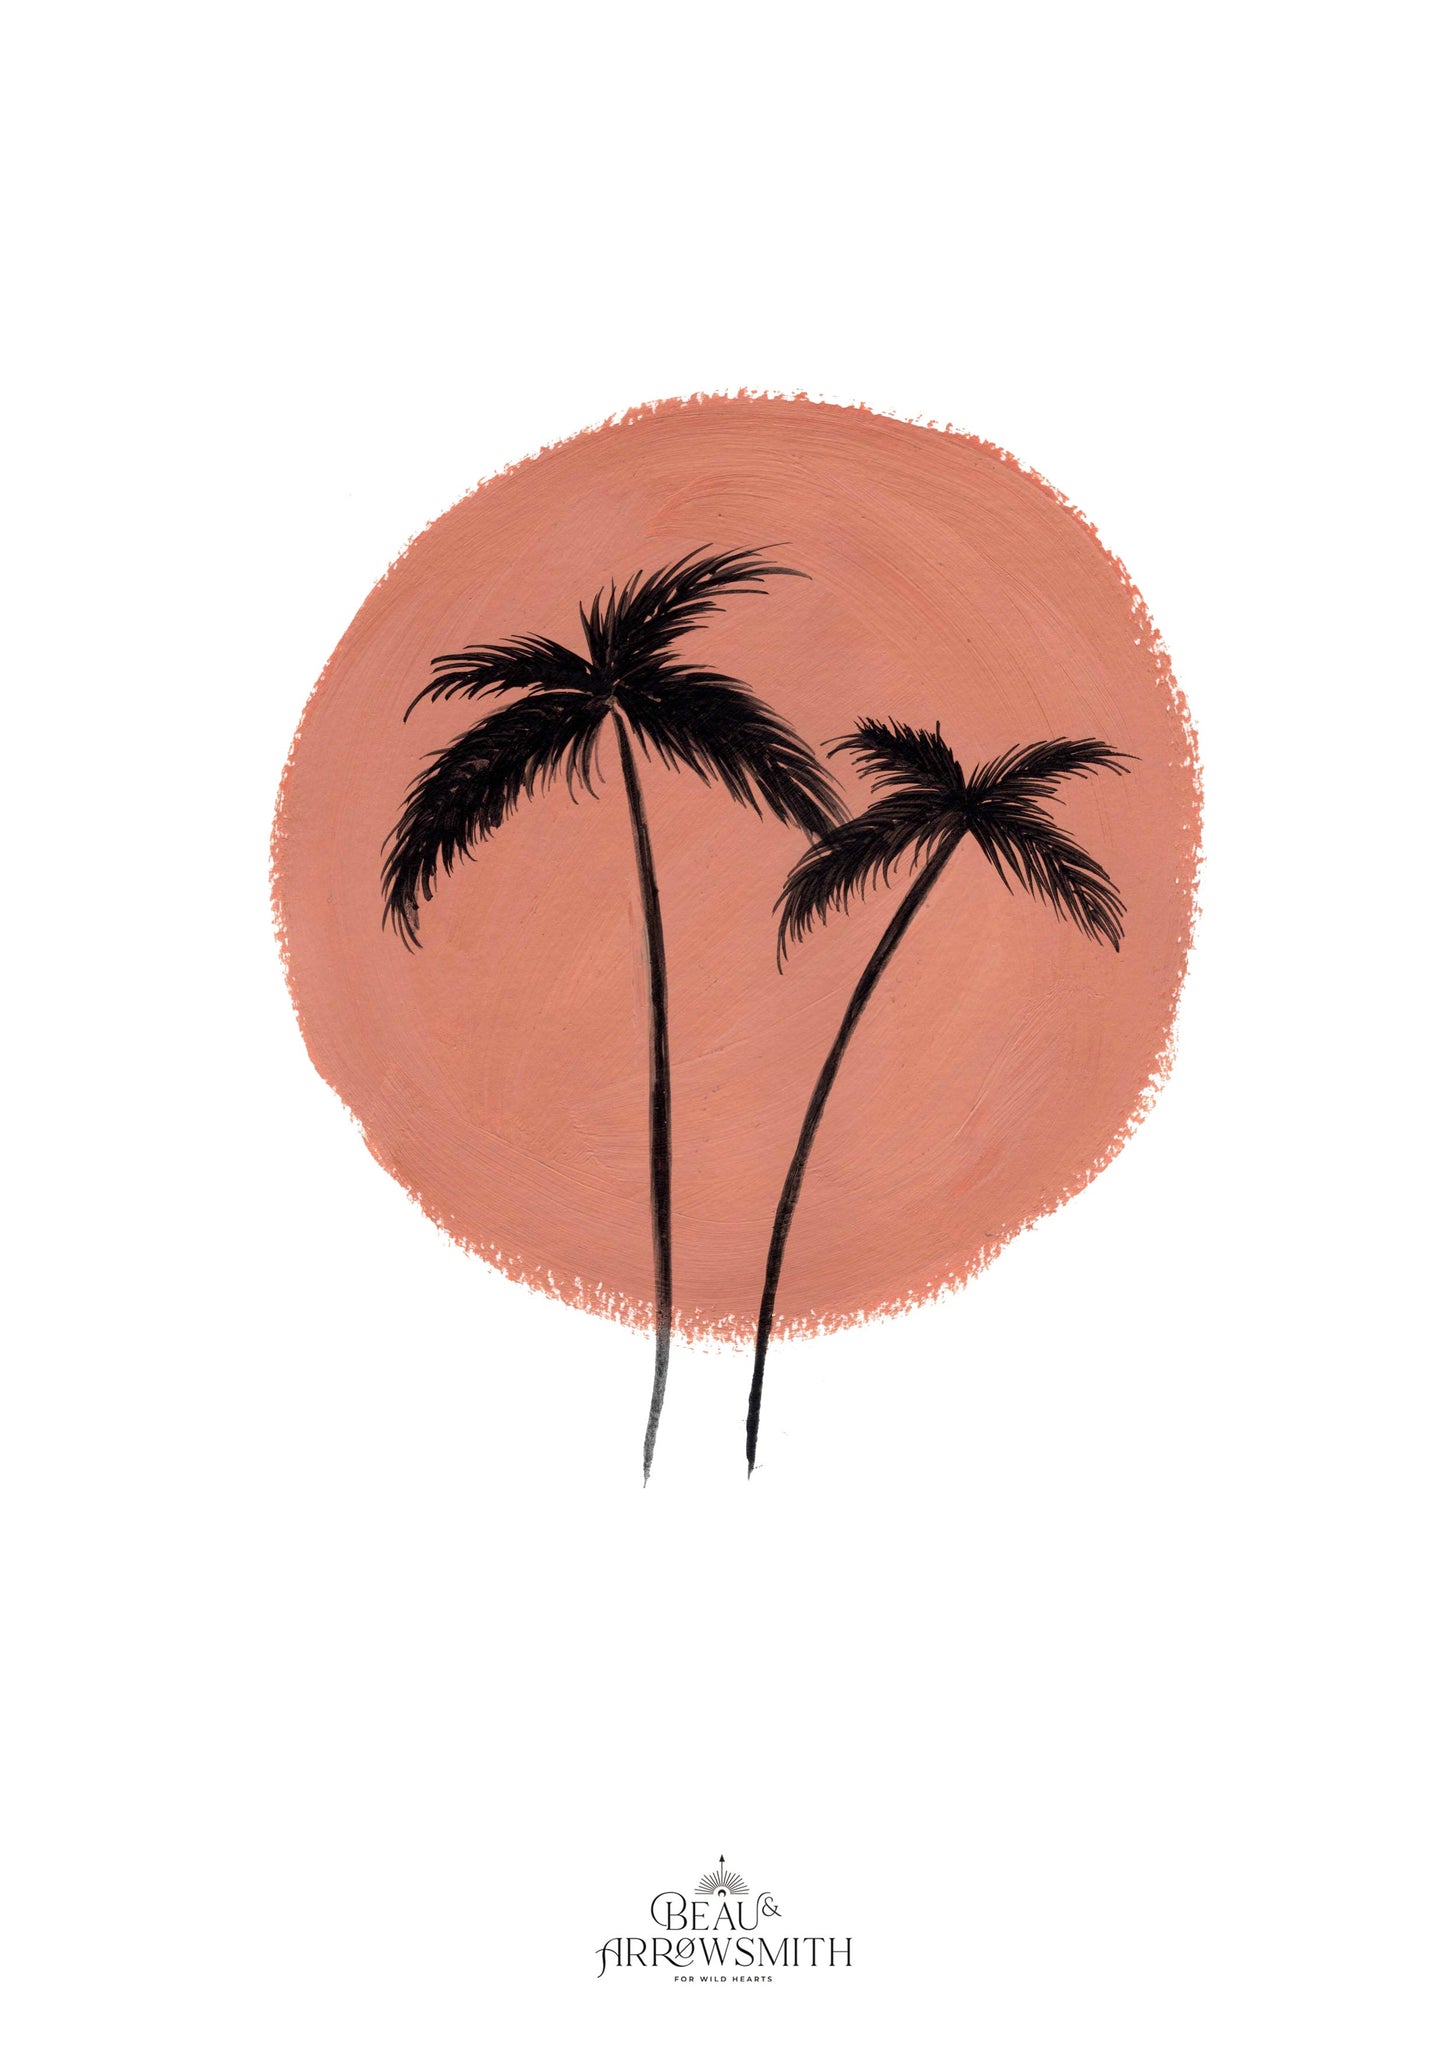 Palm Tree Drawing Images - Free Download on Freepik